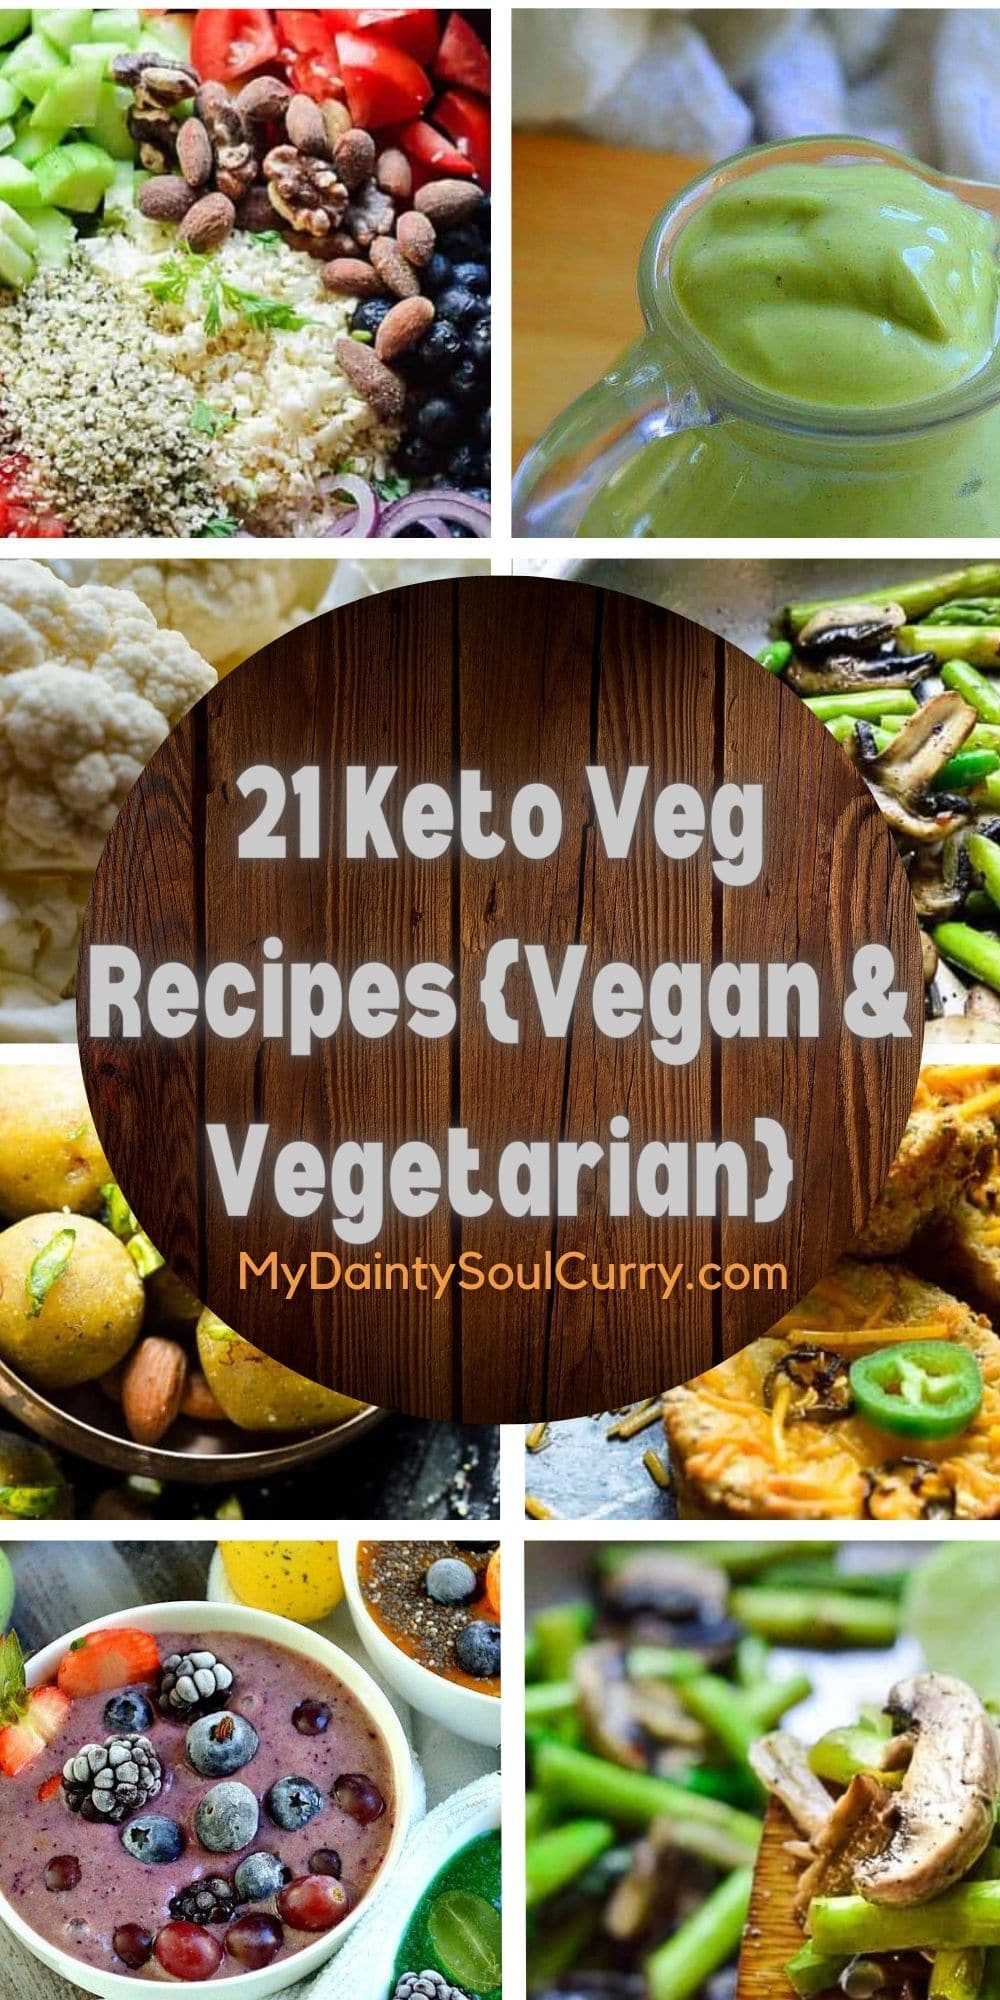 21 Keto Veg Recipes {Vegan & Vegetarian} - My Dainty Soul Curry